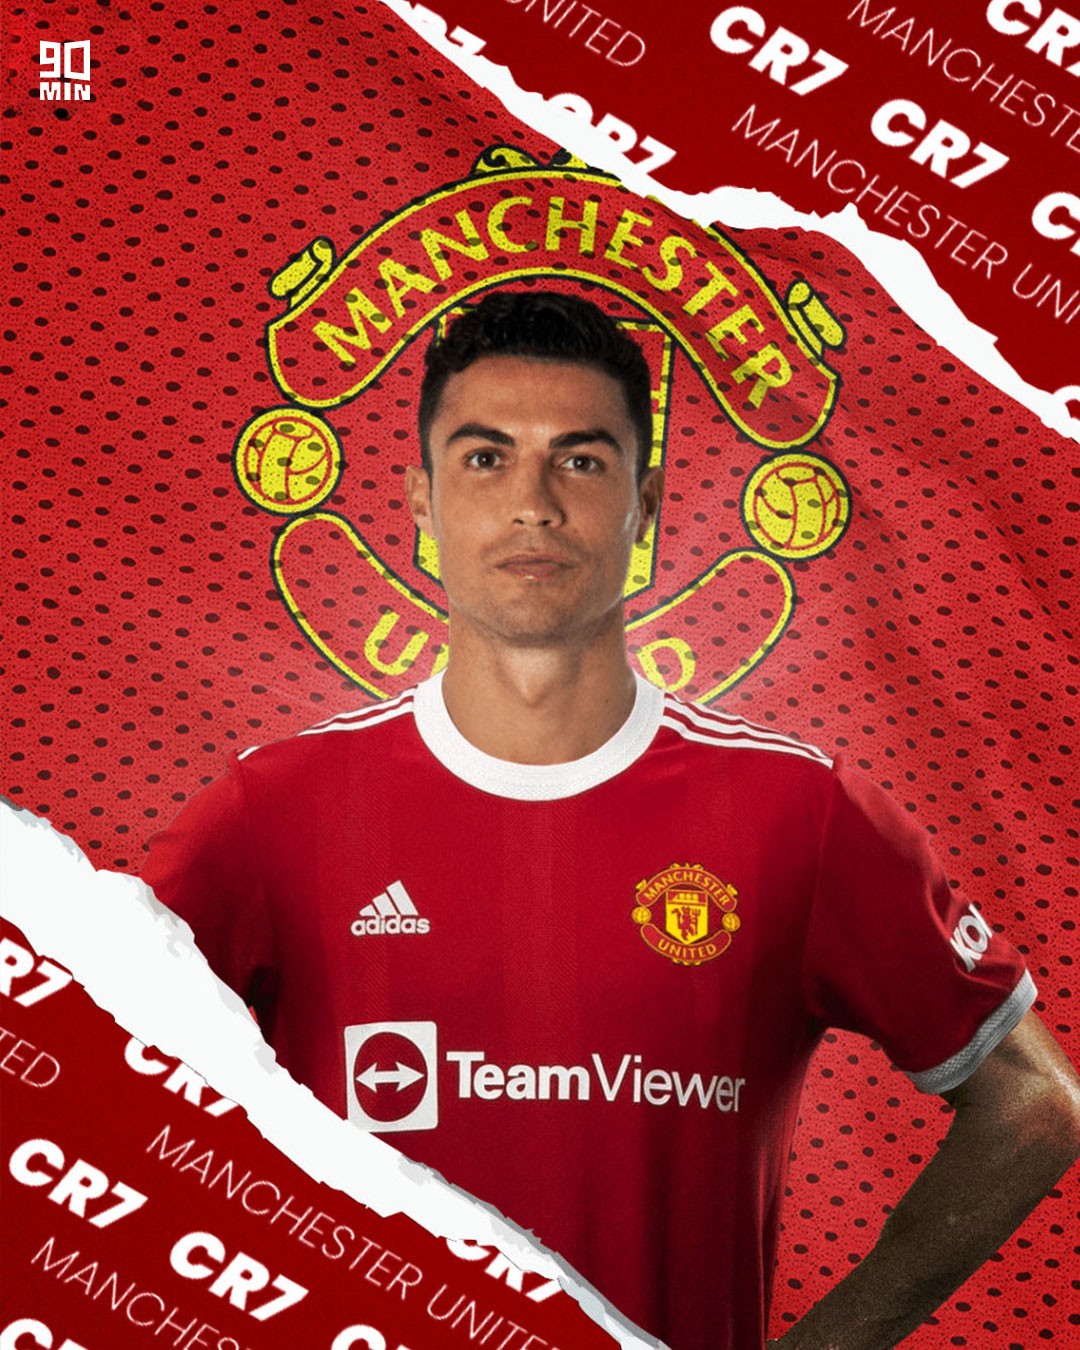 Ronaldo Manchester United Photos 2021 - Wallpaperforu